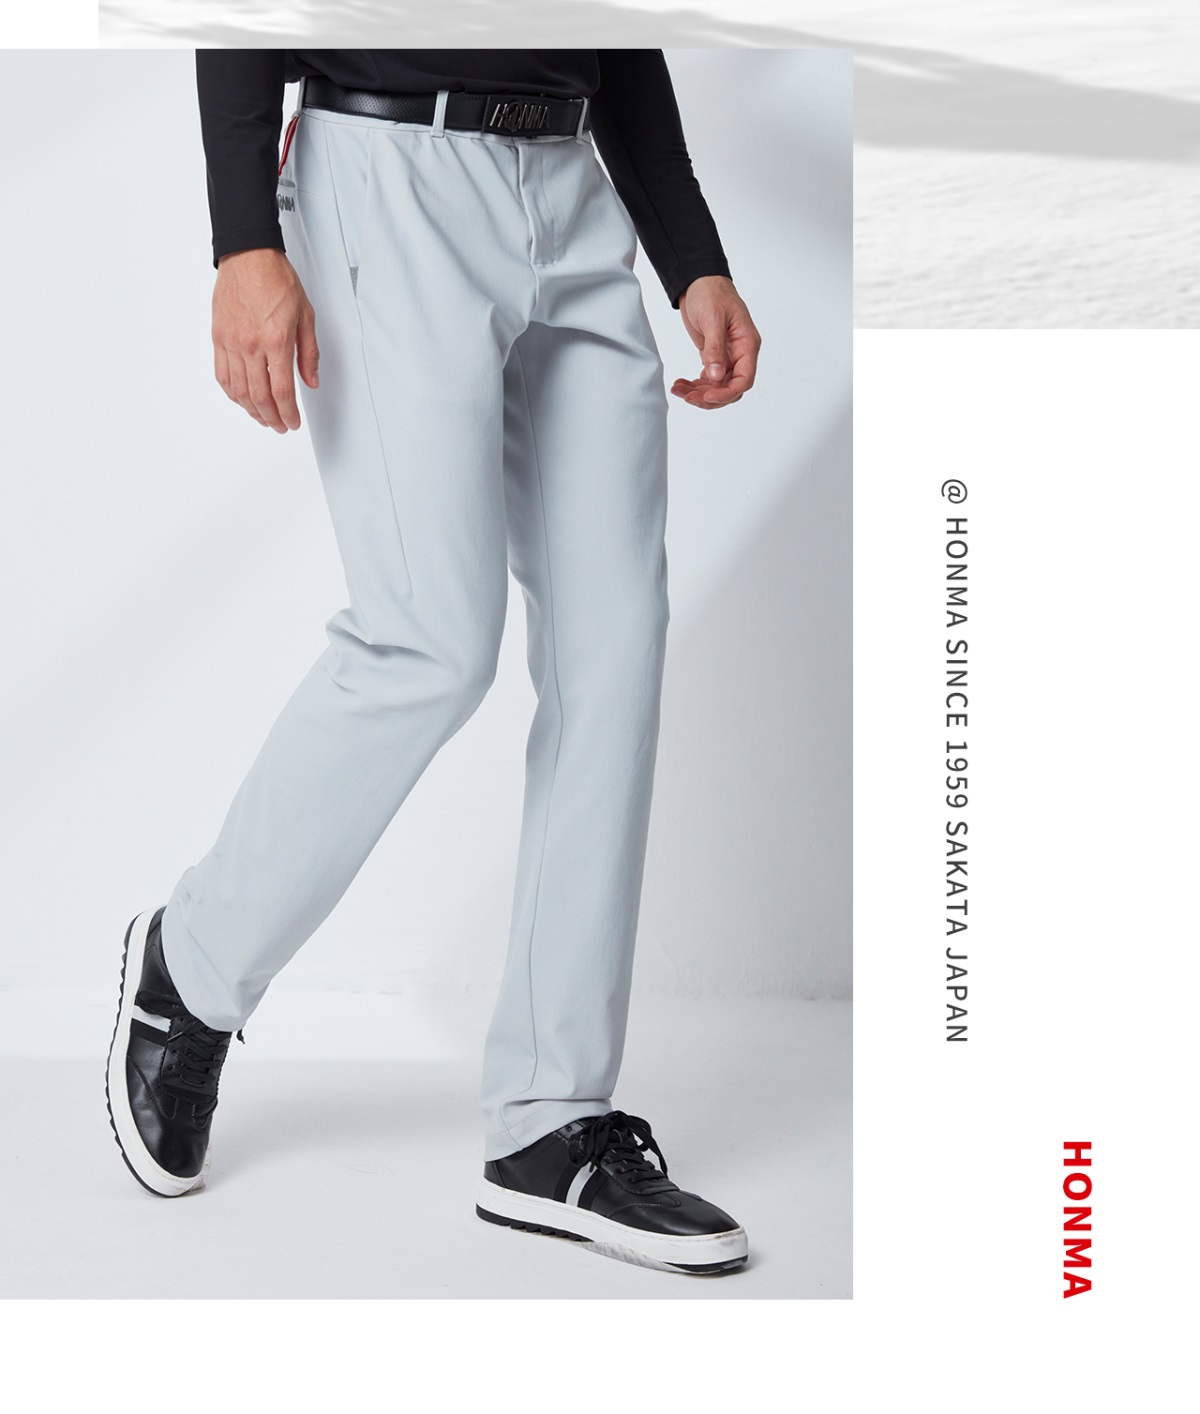 HONMA新款高尔夫男子长裤日本进口面料弹力舒适轻盈透气秋黑灰